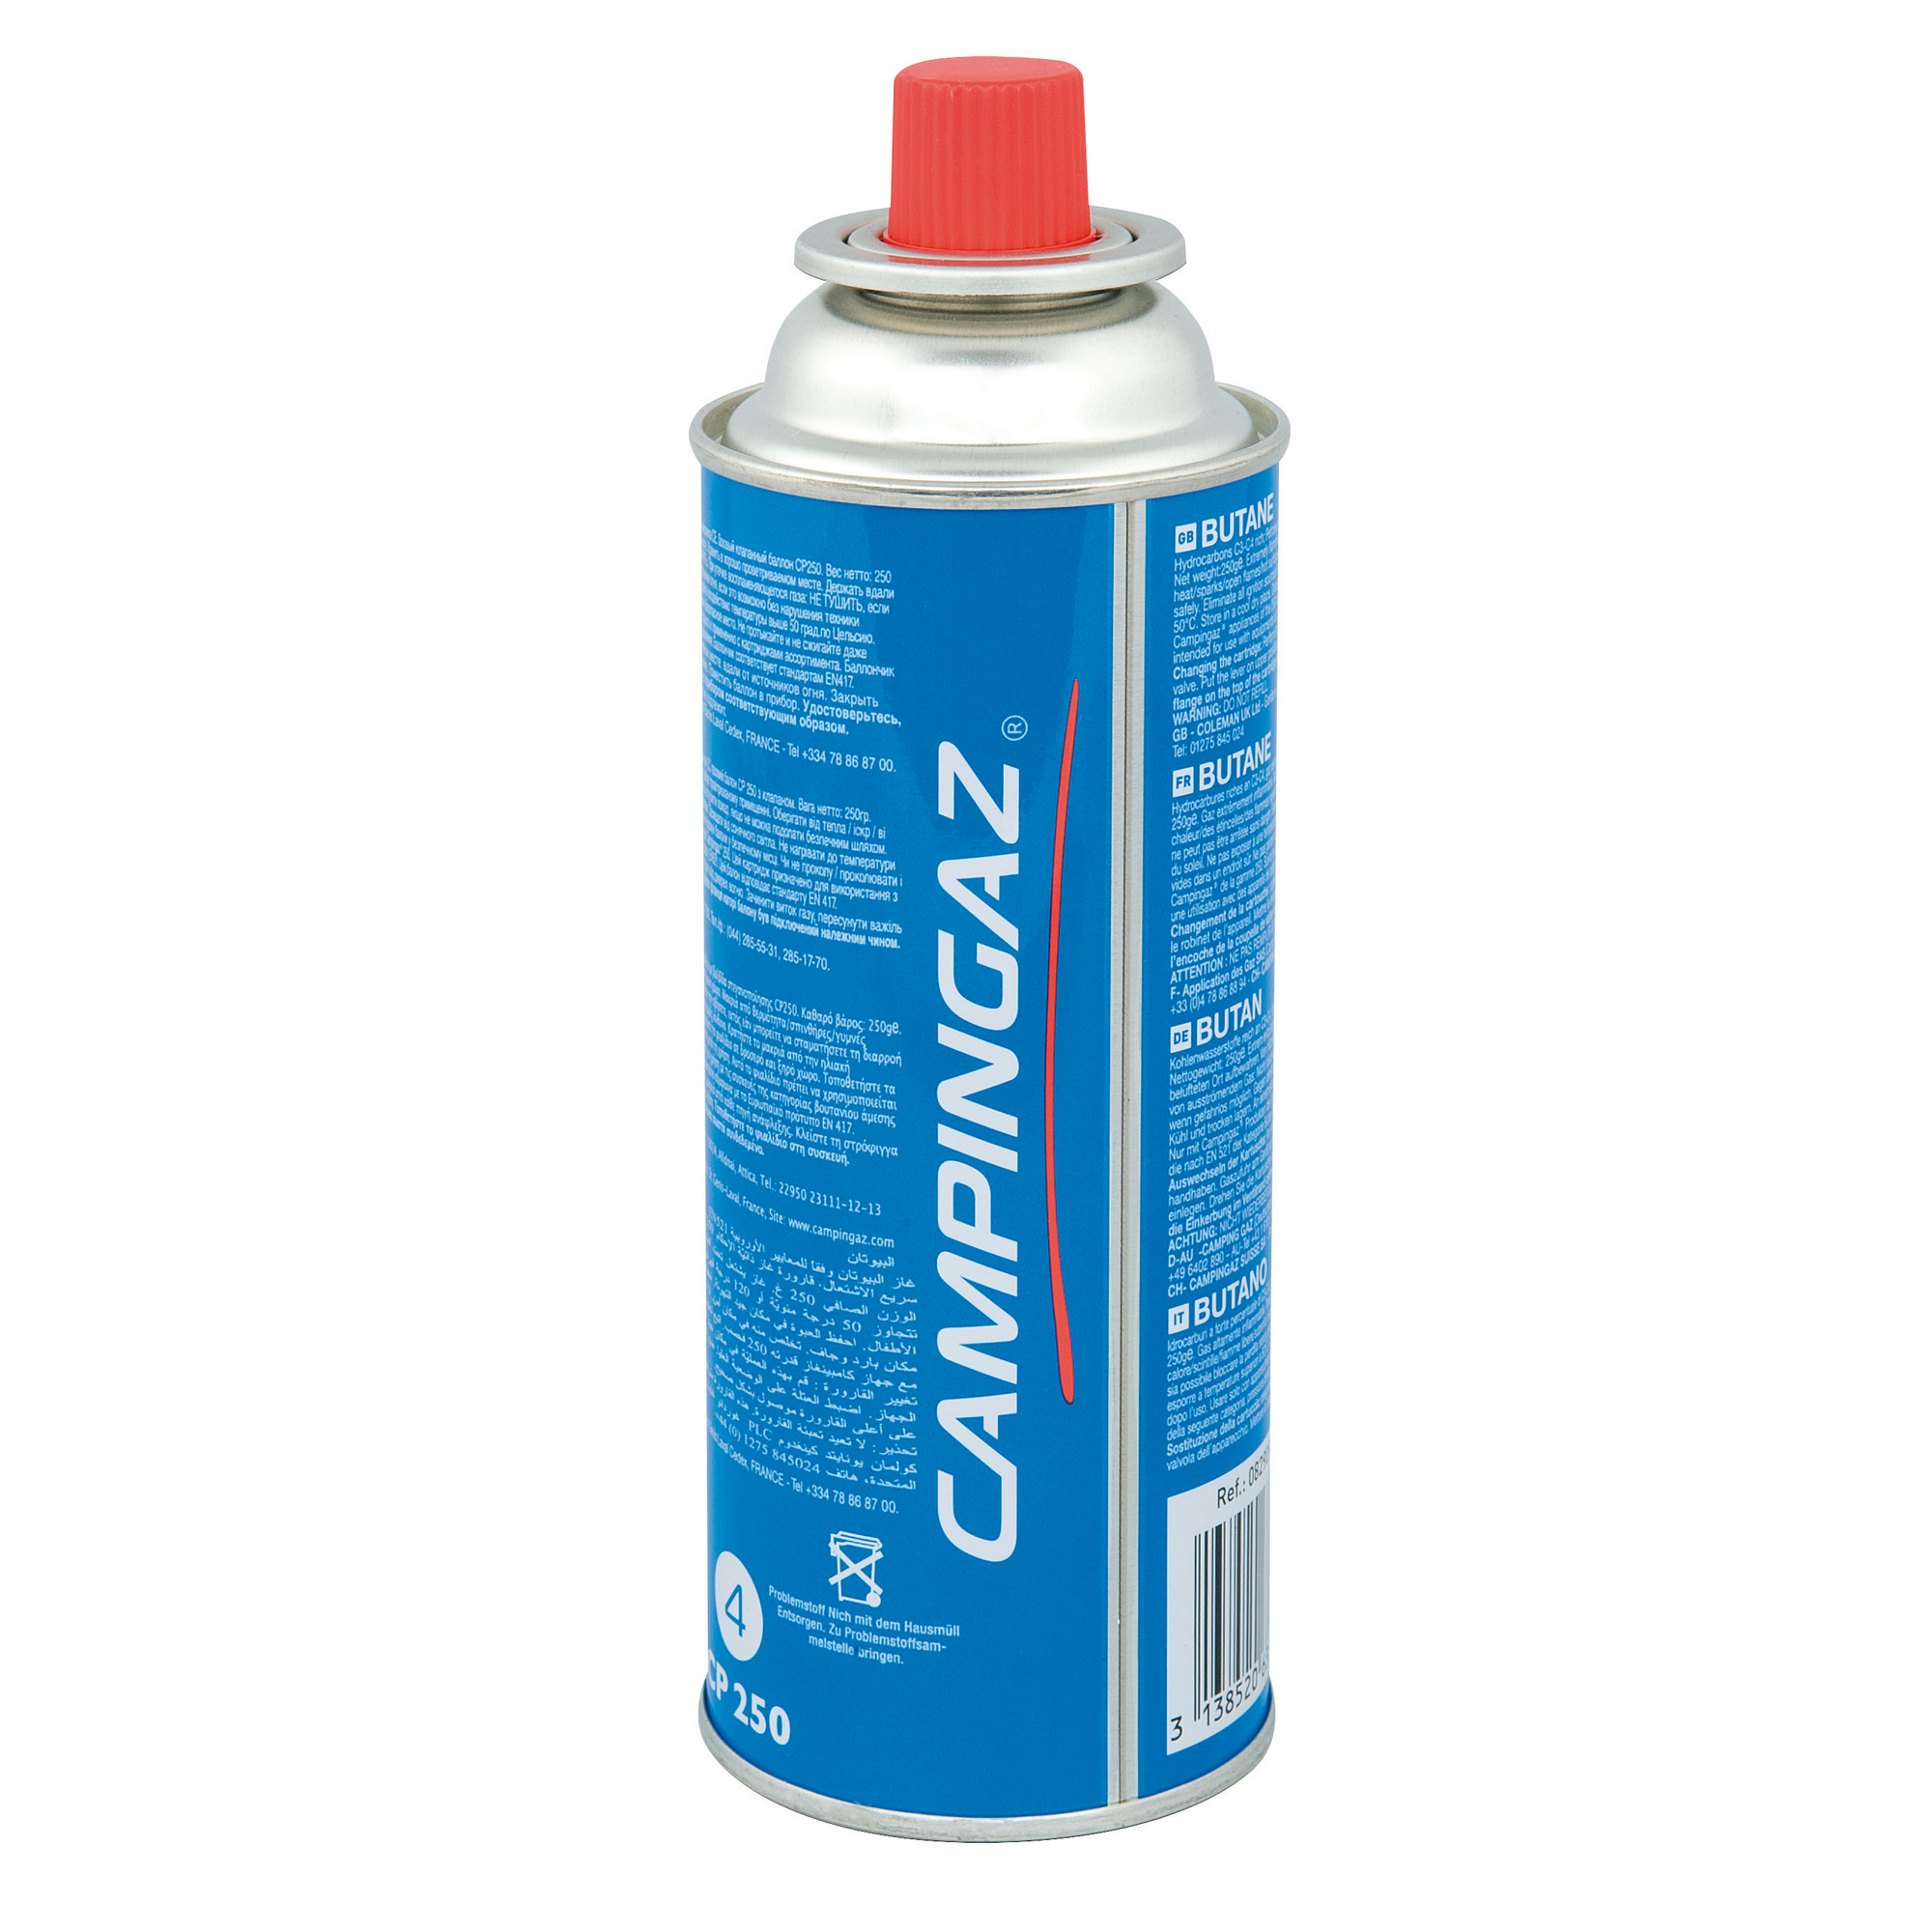 Ventilkartusche CP 250 Isobutangas 220 g + product picture